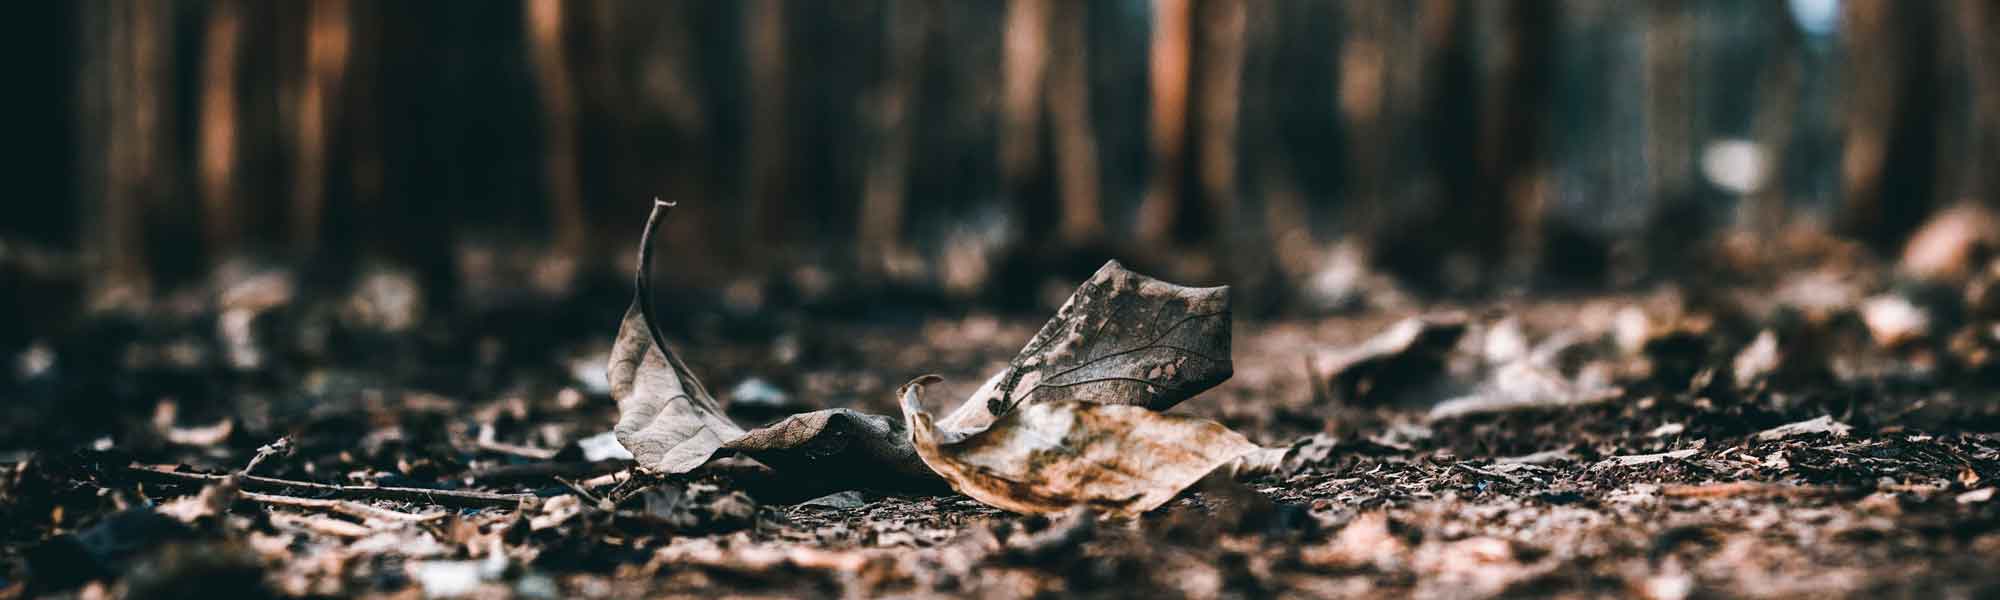 Burned debris on the forest floor